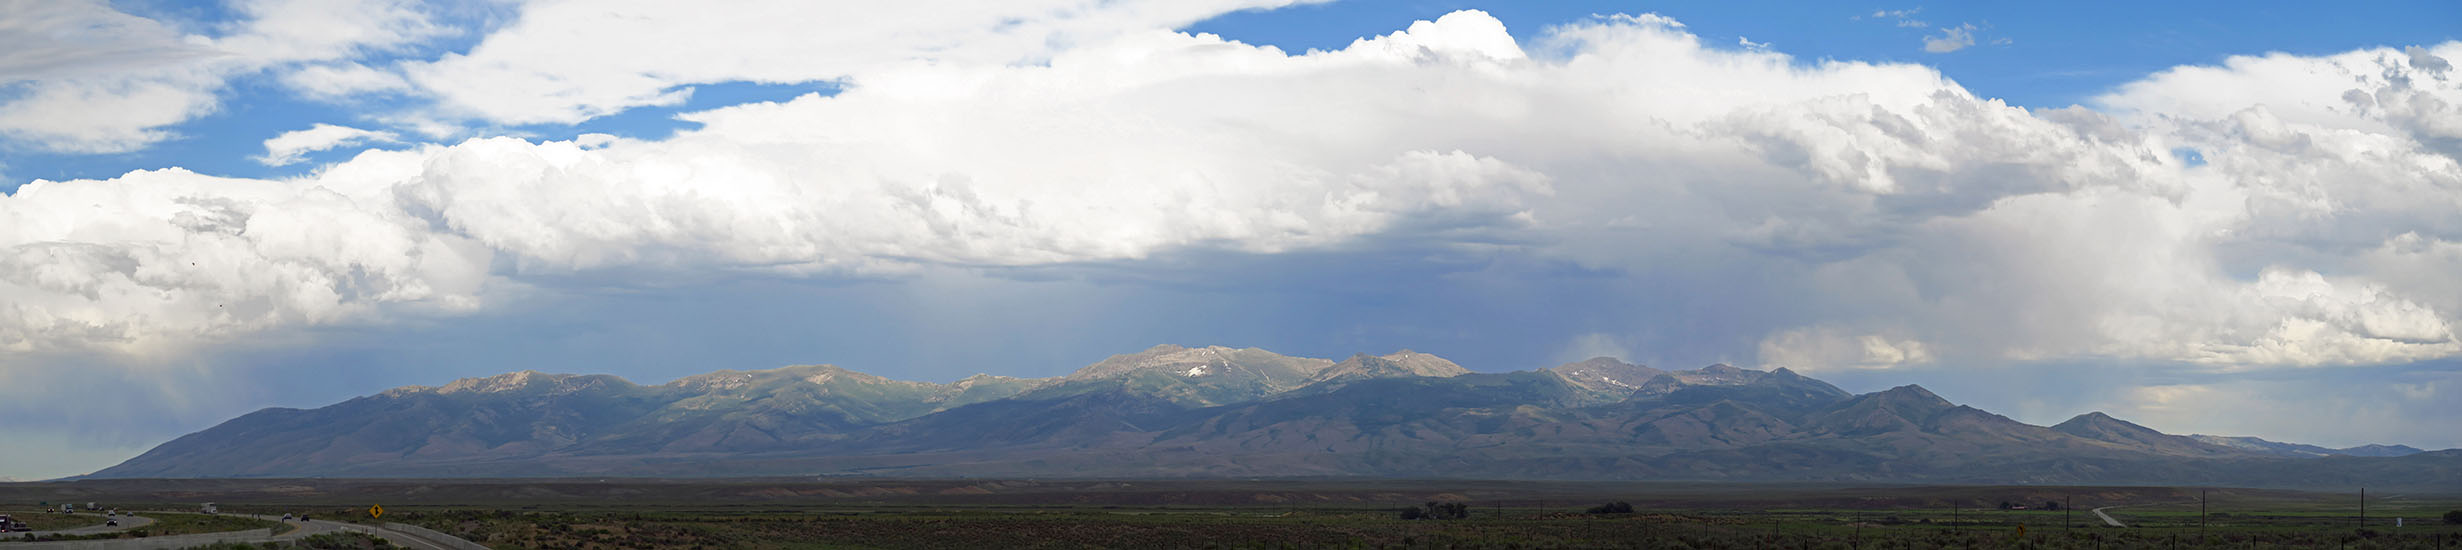 East Humboldt Mountains panorama [I-80, Elko County, Nevada]